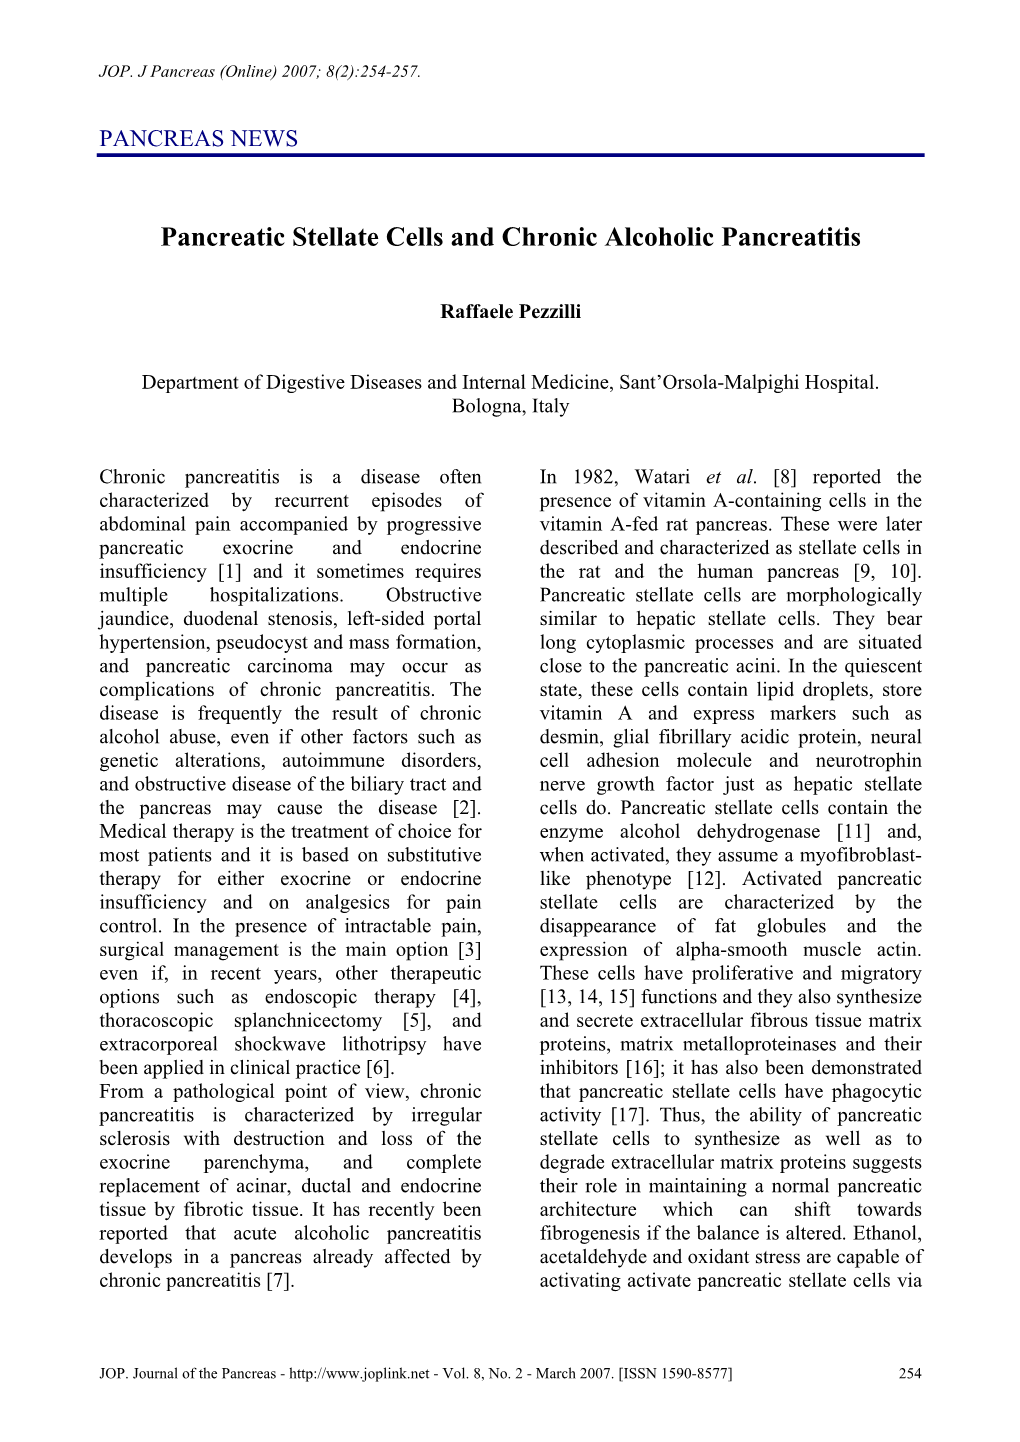 Pancreatic Stellate Cells and Chronic Alcoholic Pancreatitis